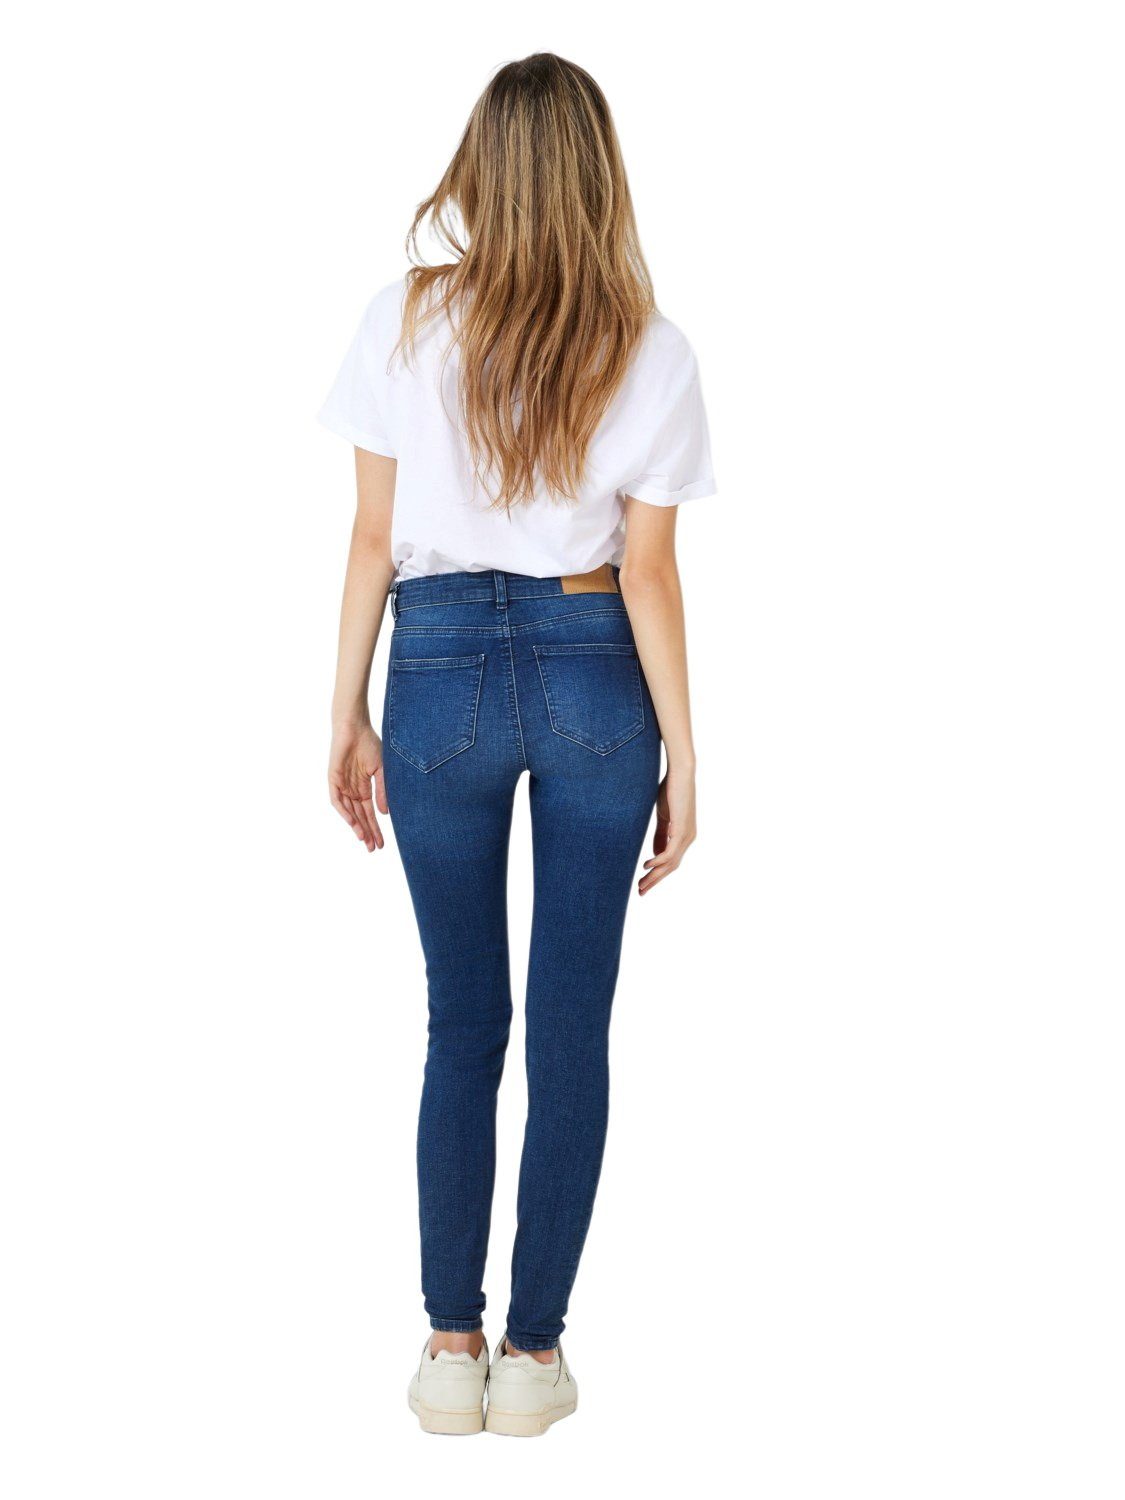 Noisy LUCY Stretchanteil may Skinny-fit-Jeans Jeanshose mit